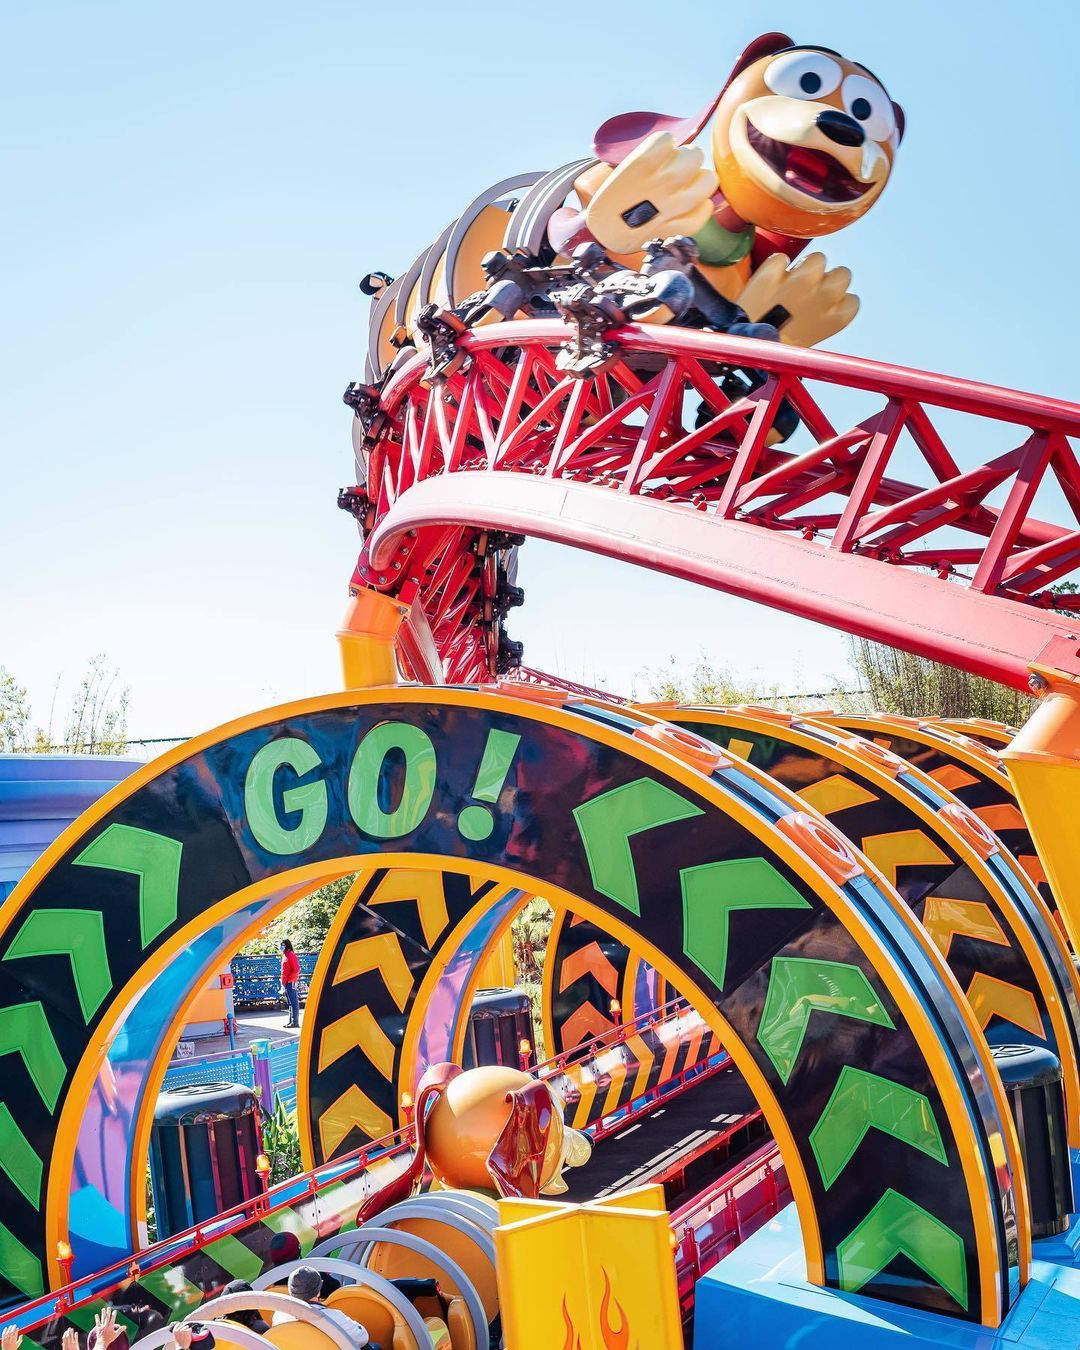 Slinky Dog Dash - Montanha russa do Toy Story na Disney World